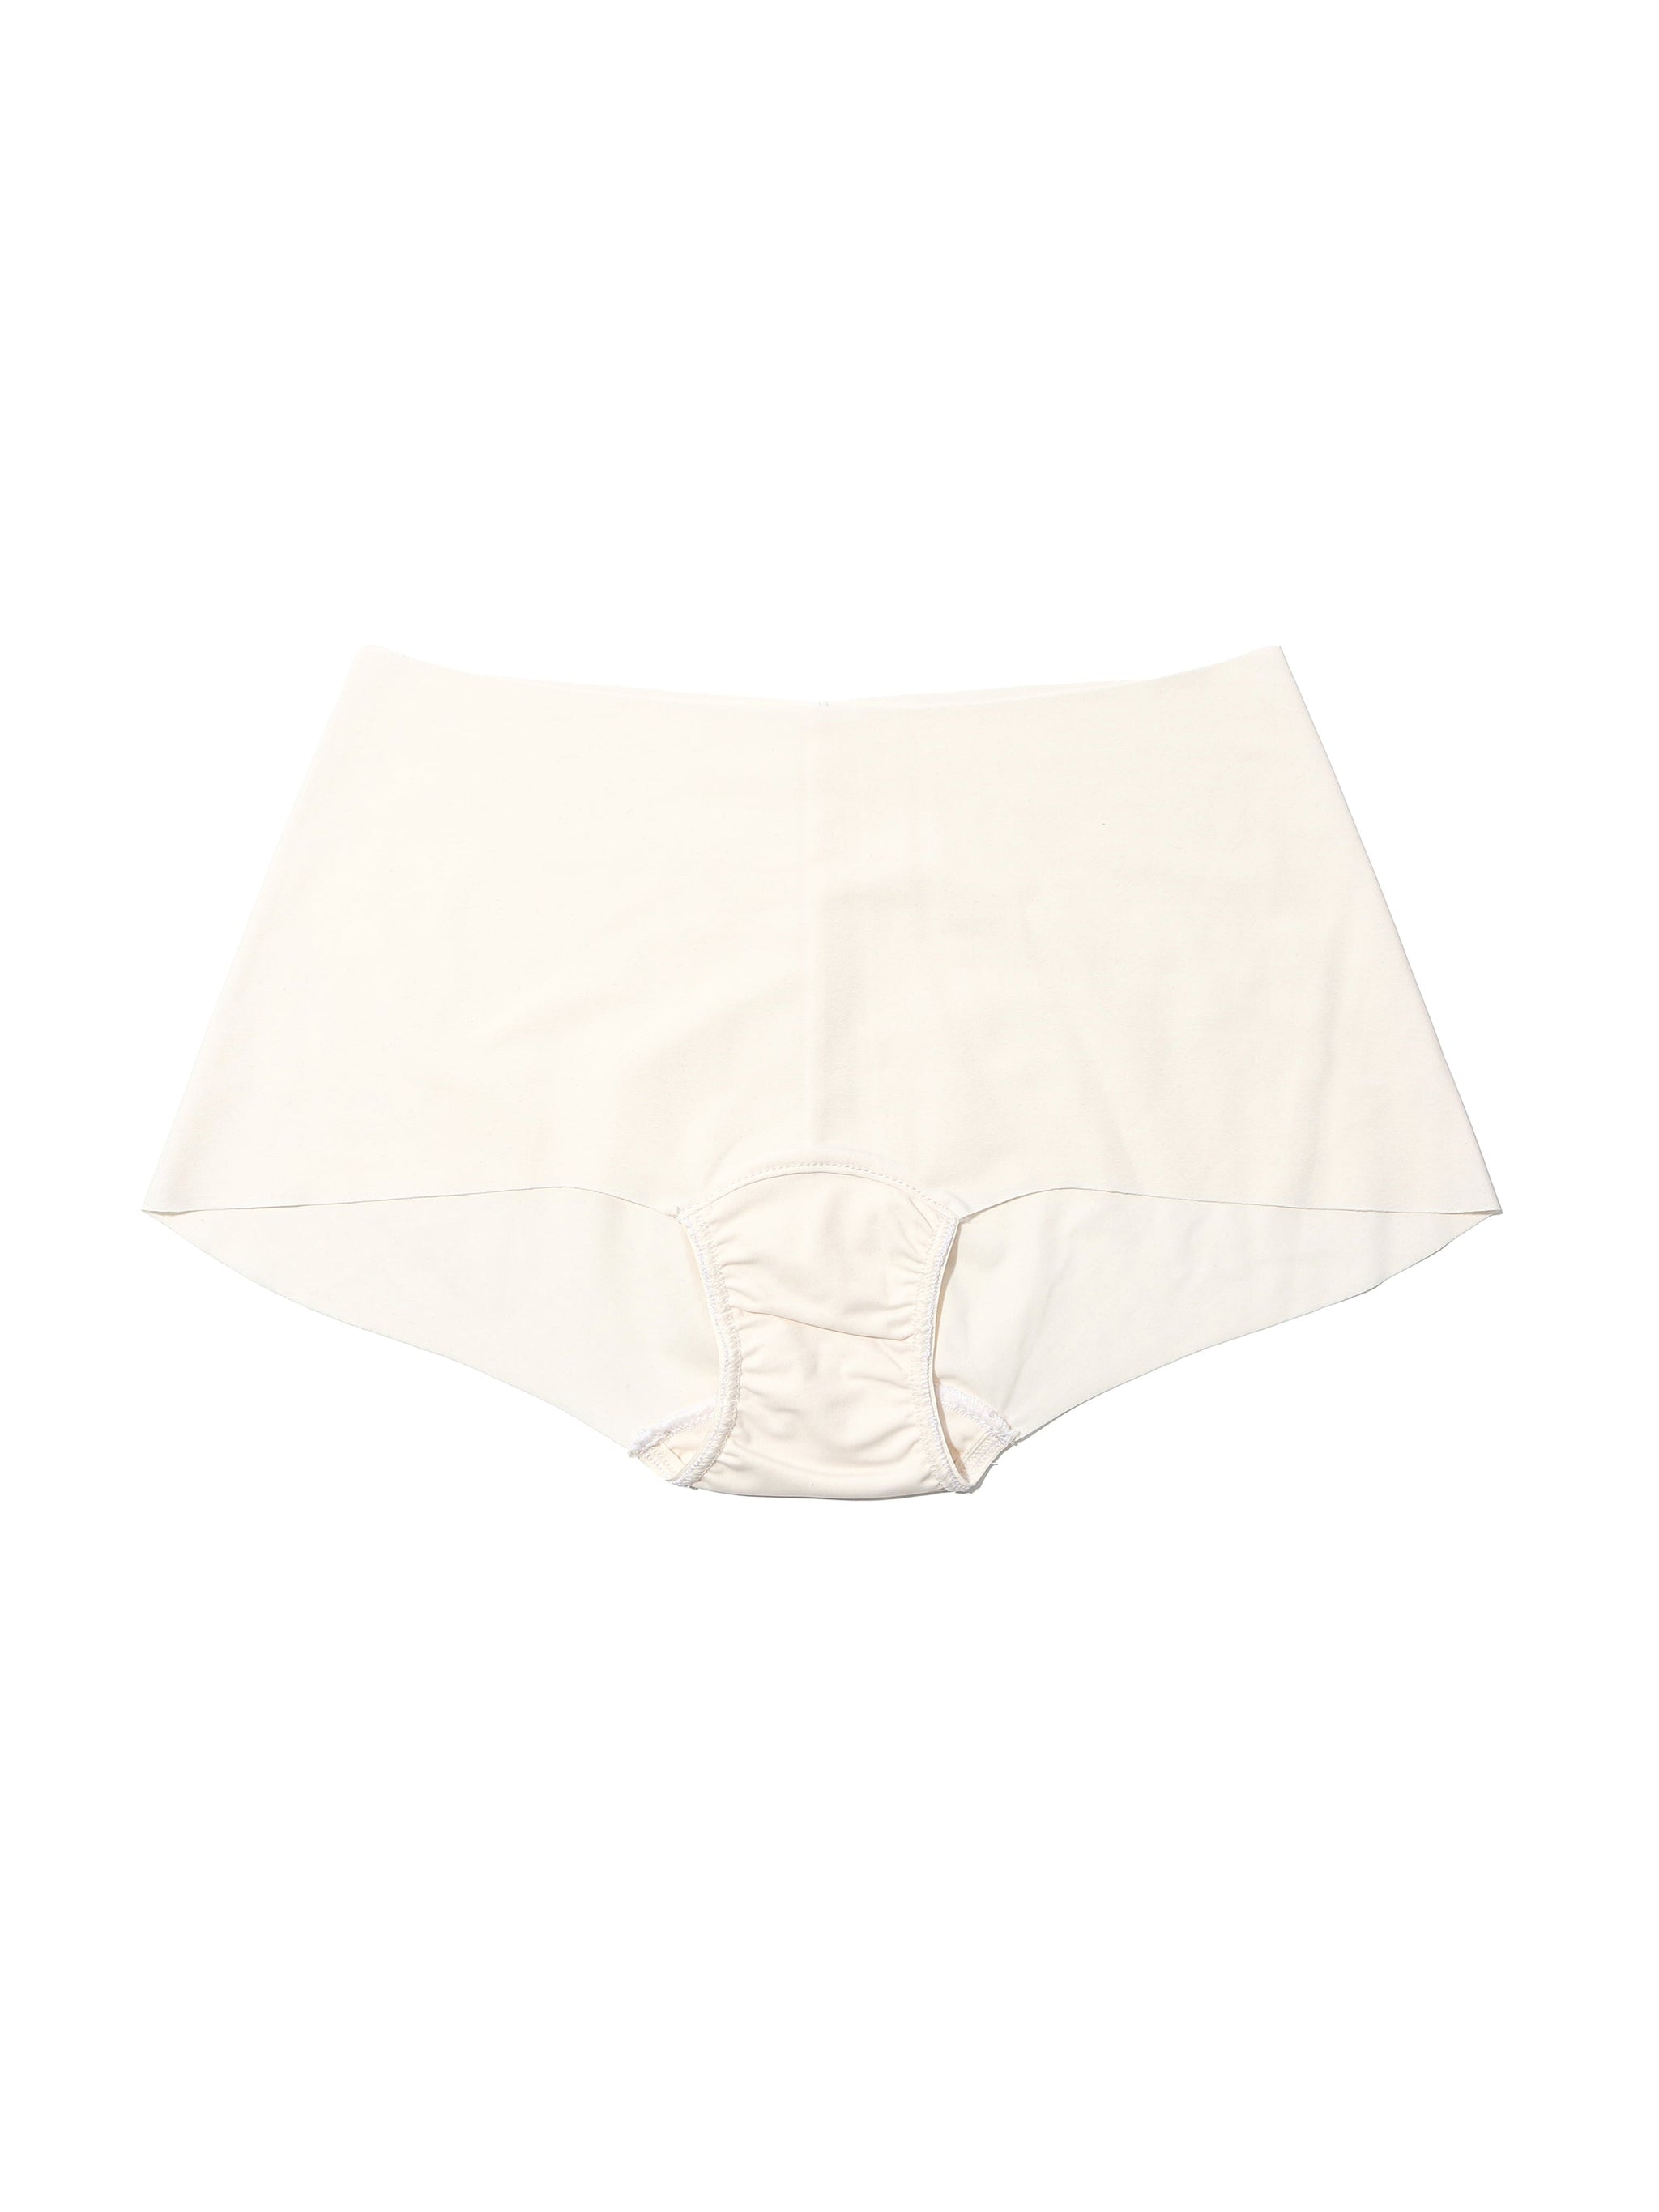 Shop Hanky Panky Plain Underwear by shopmama